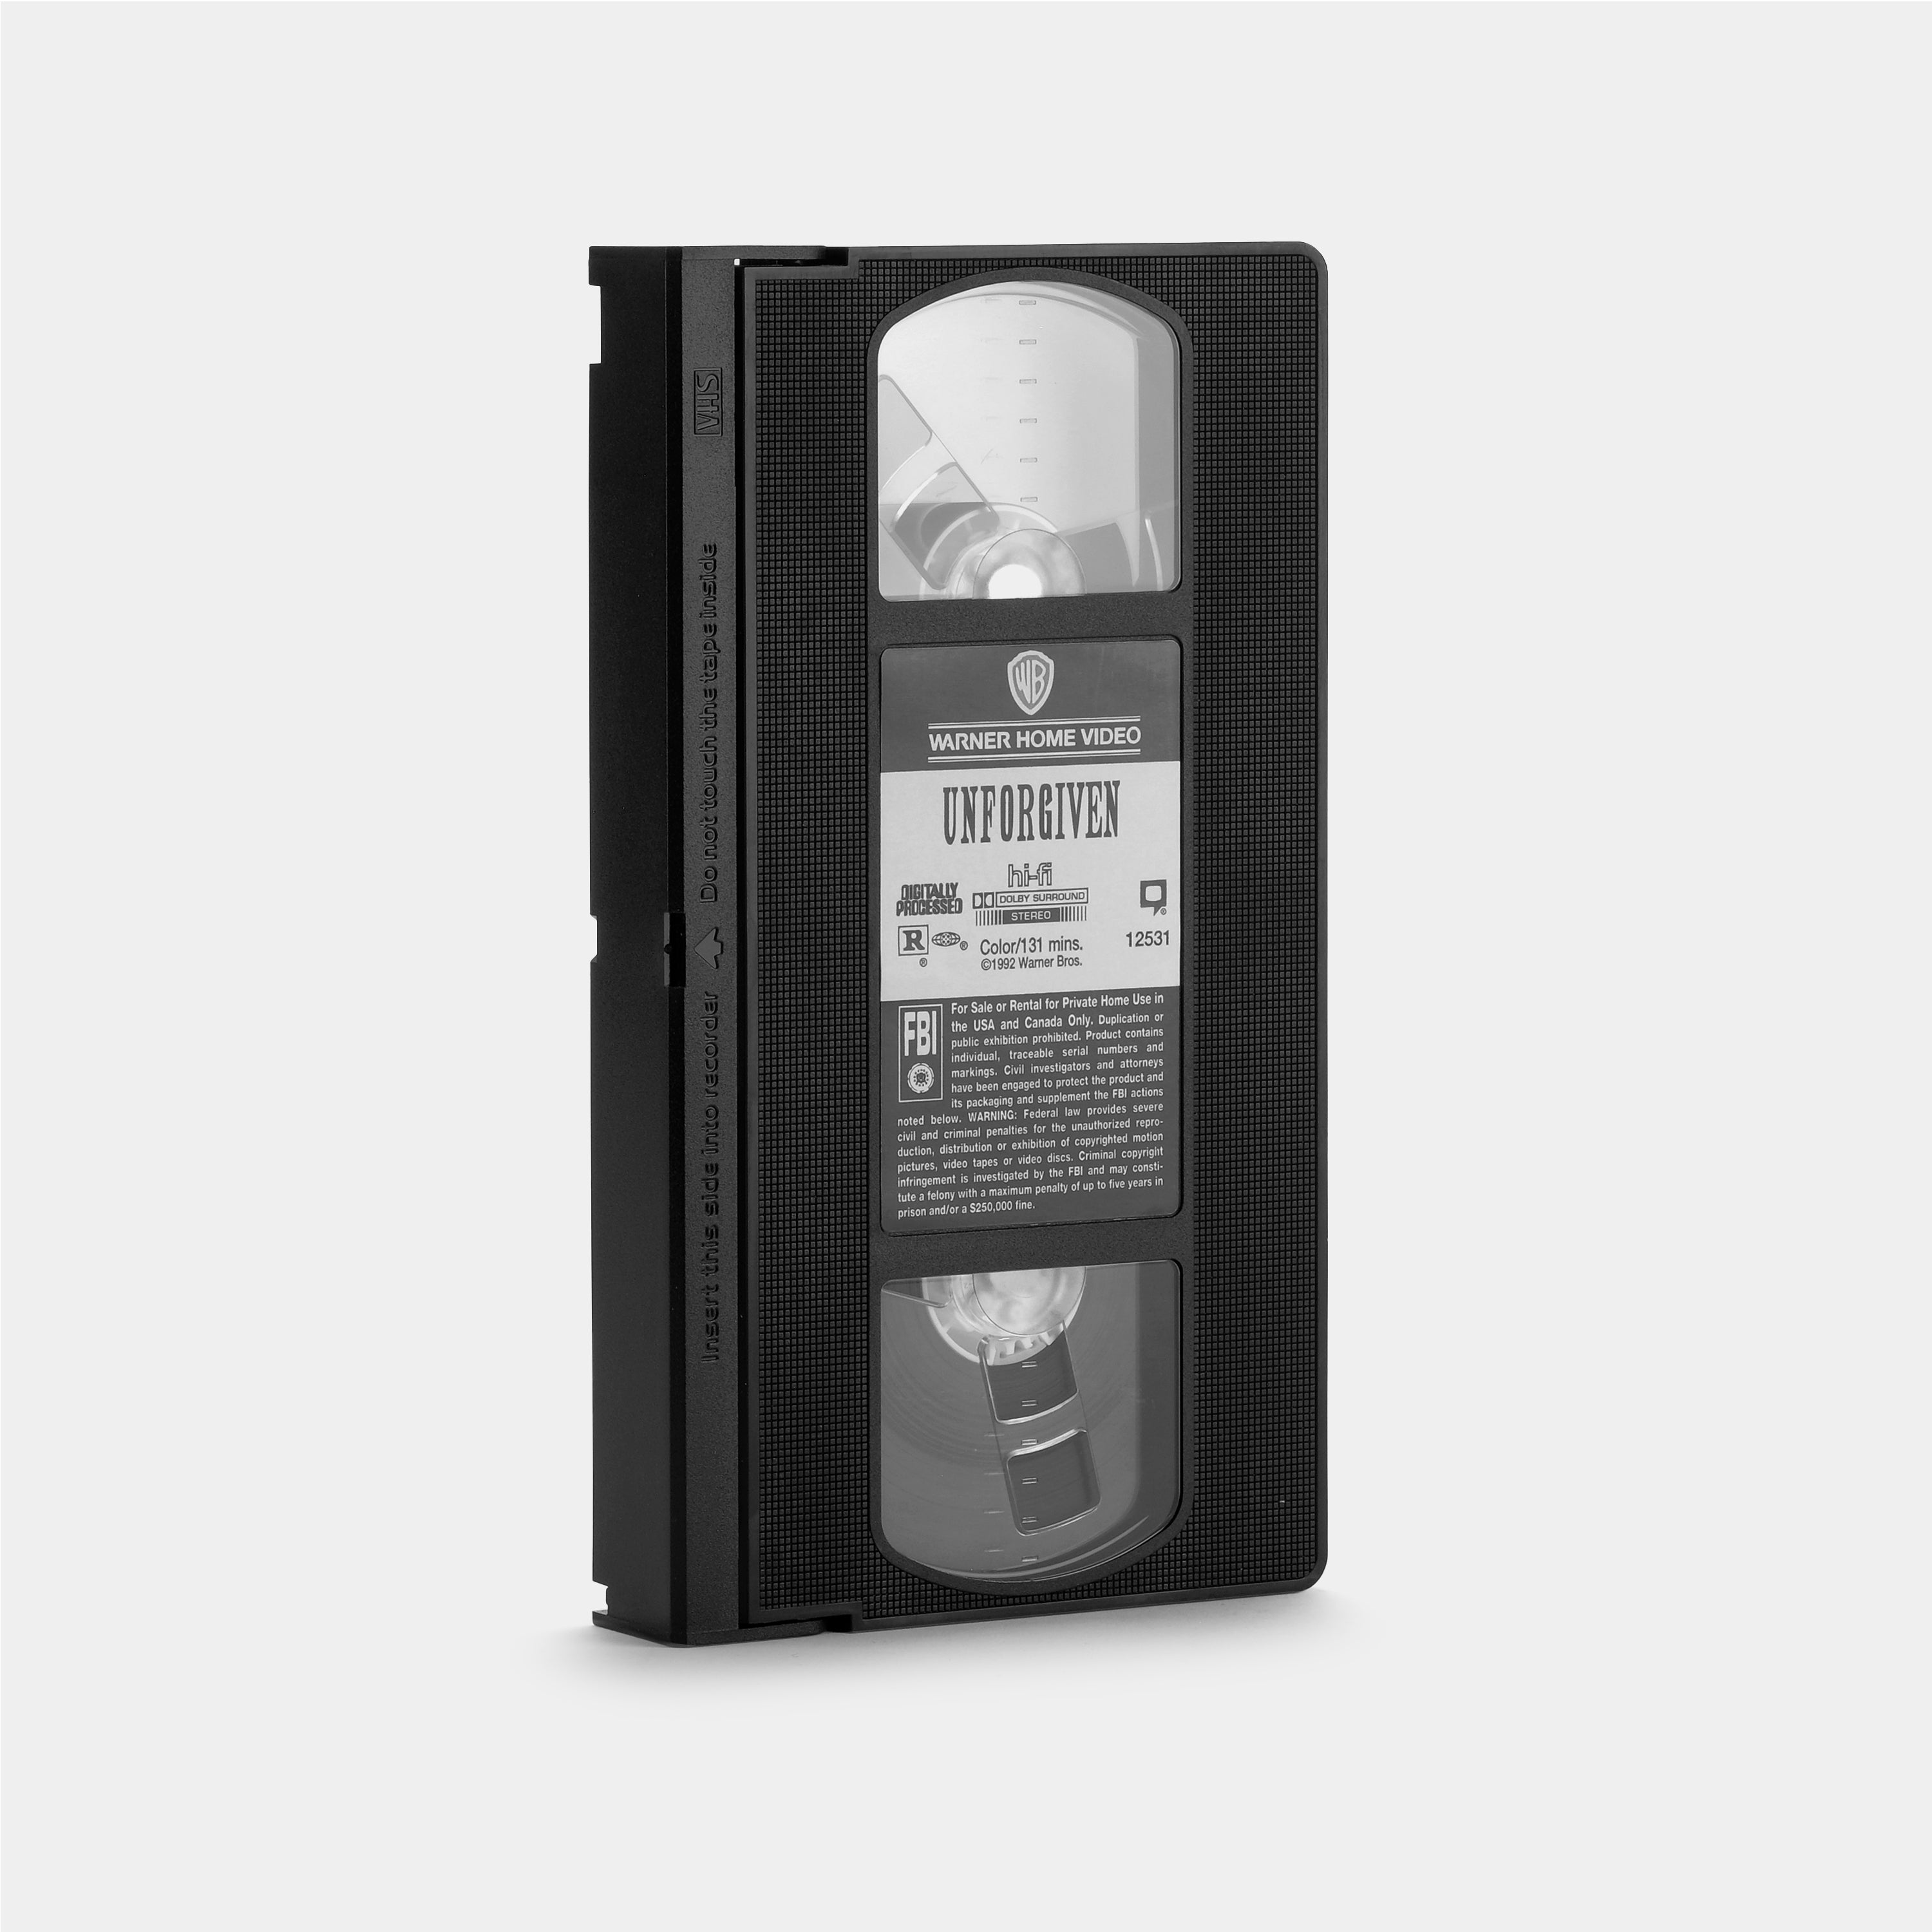 Unforgiven VHS Tape